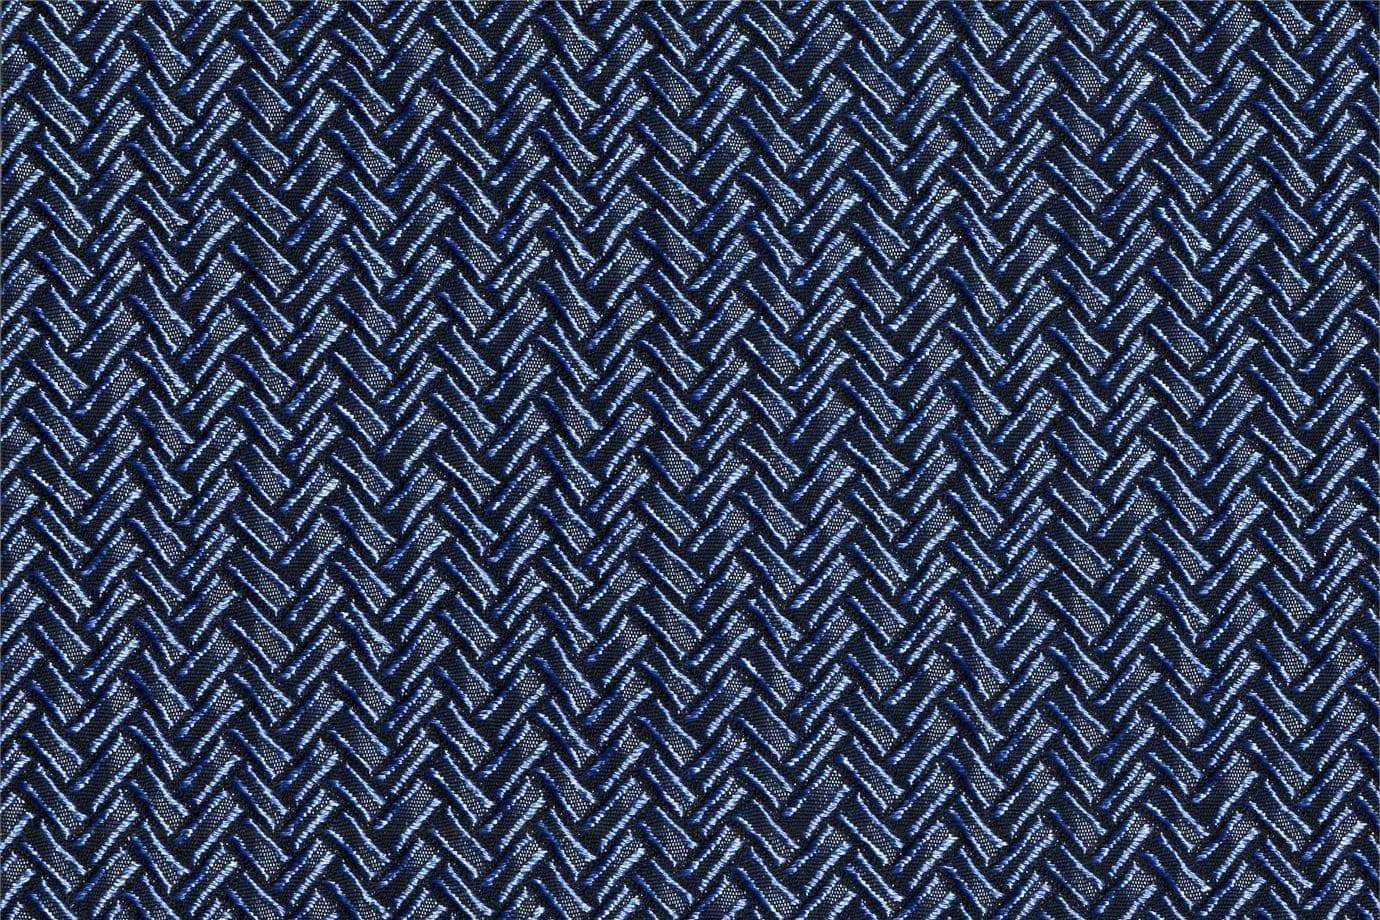 J1951 SECONDIGLIANO 024 Blu cina home decoration fabric